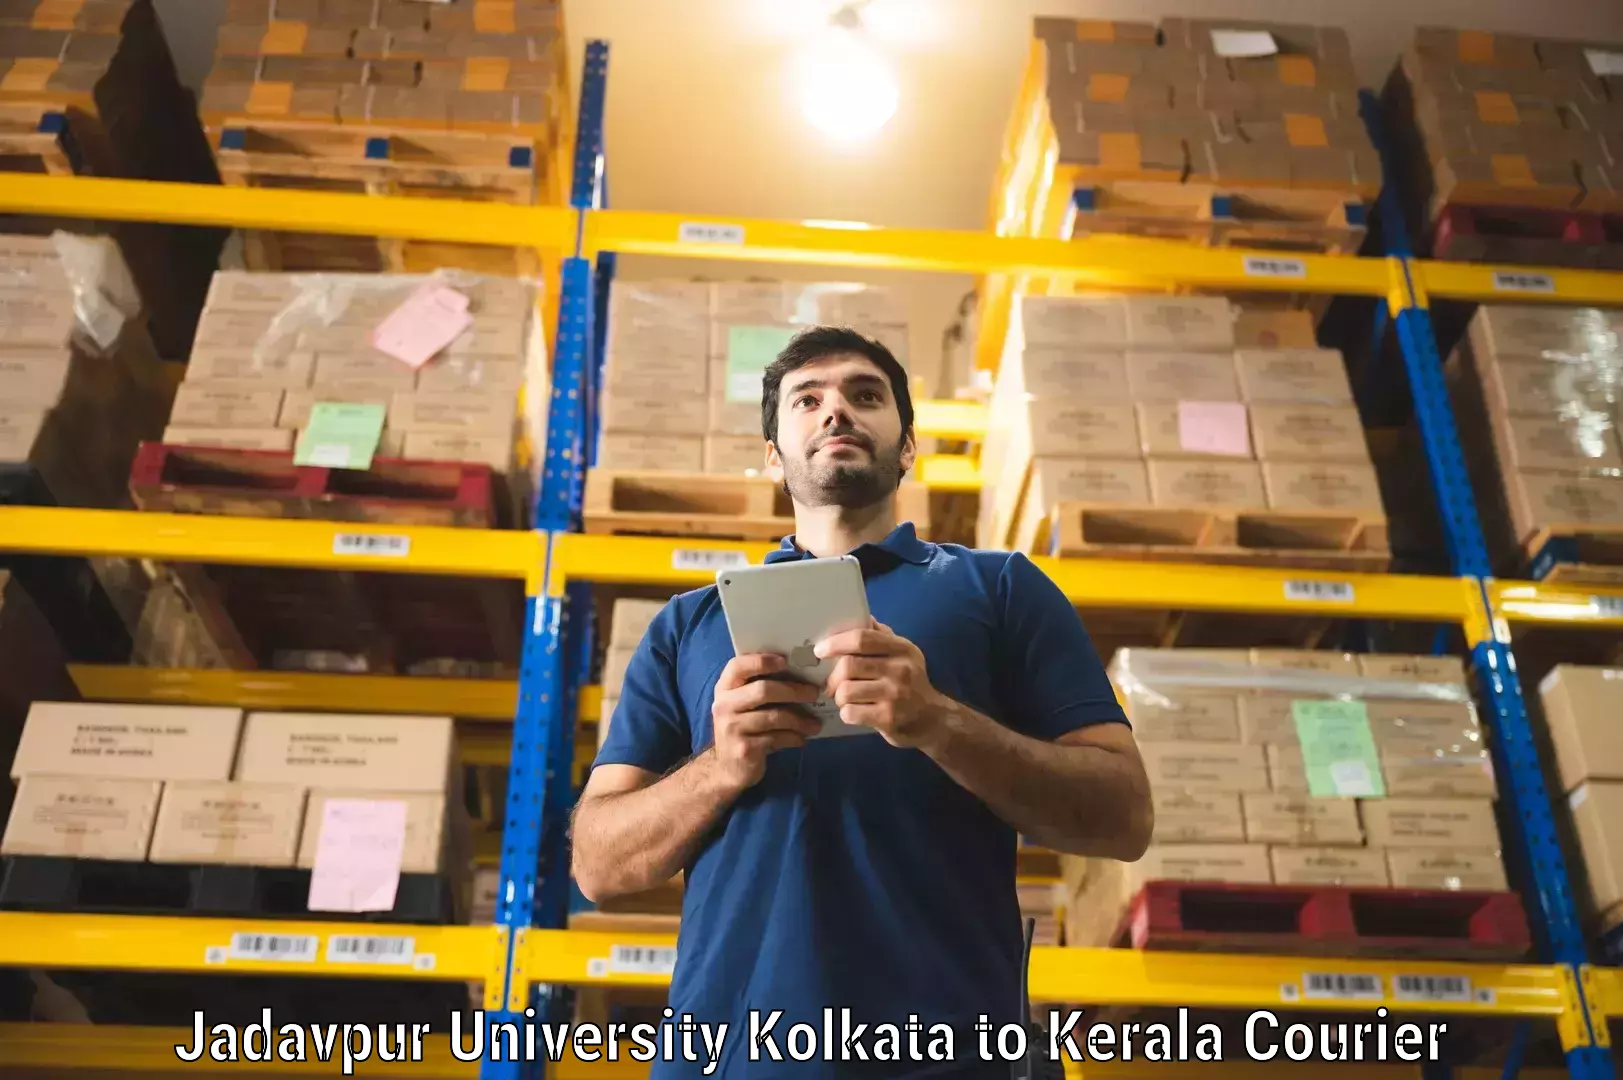 Efficient order fulfillment Jadavpur University Kolkata to Kerala